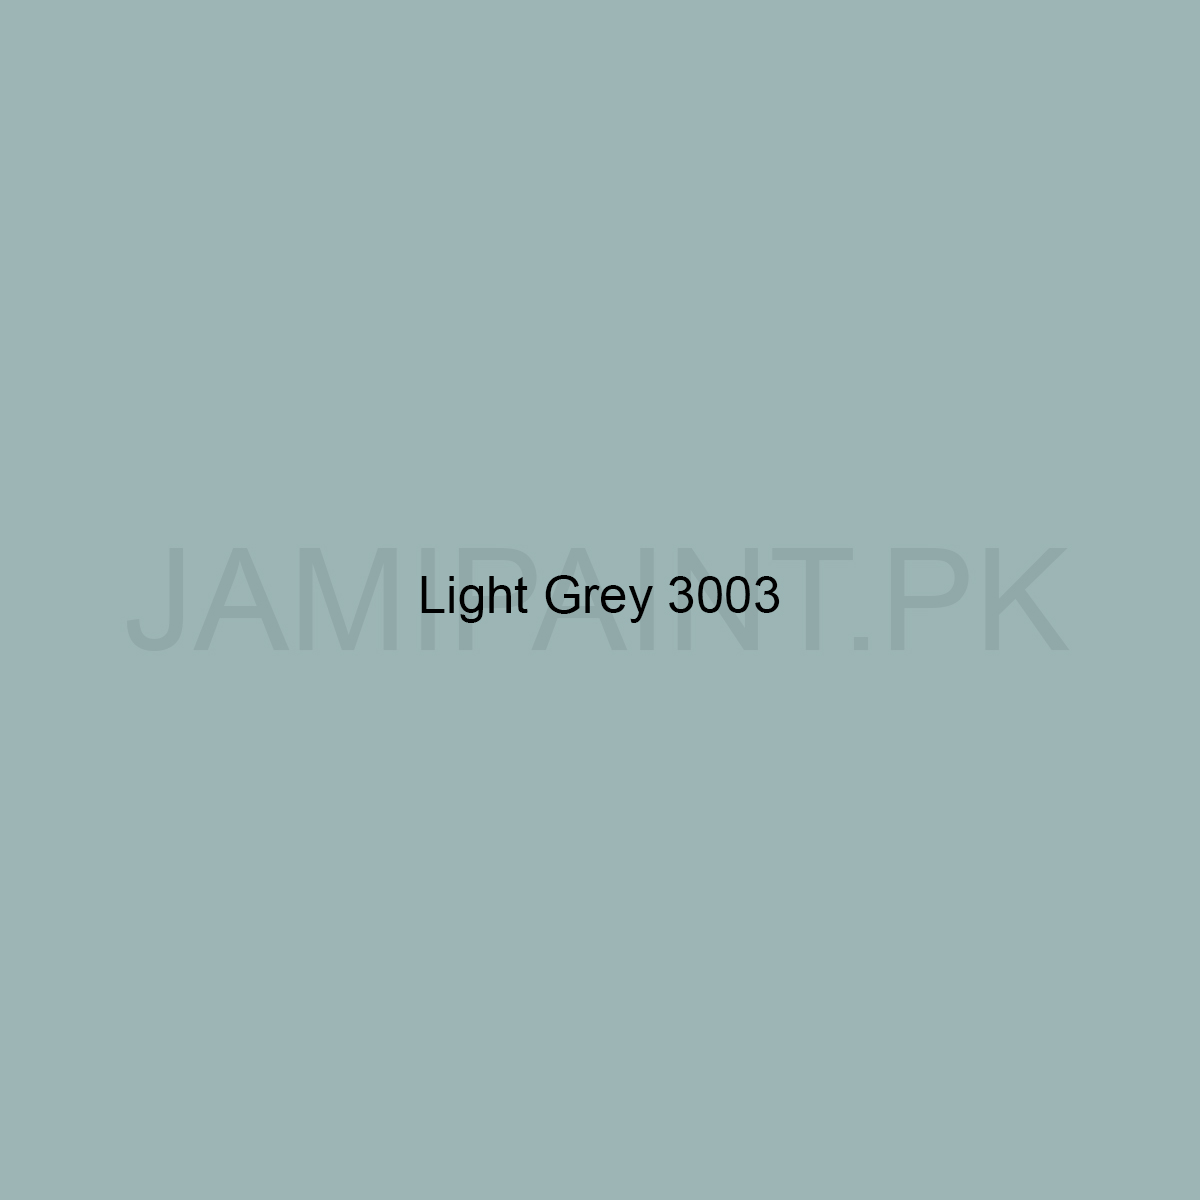 Brighto Synthetic Enamel light grey 3003 - Jami Paint